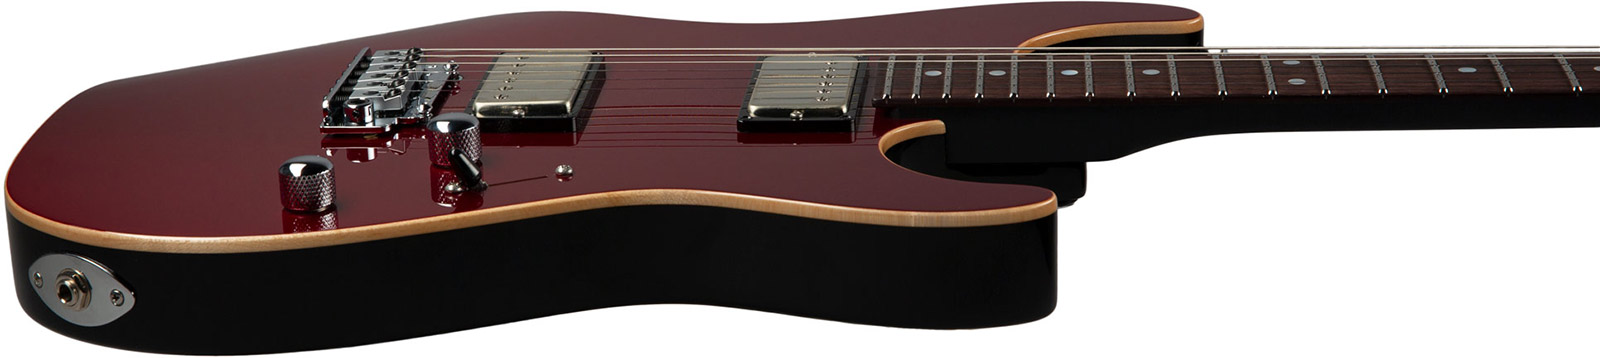 Suhr Pete Thorn Standard 01-sig-0029 Signature 2h Trem Rw - Garnet Red - Str shape electric guitar - Variation 2